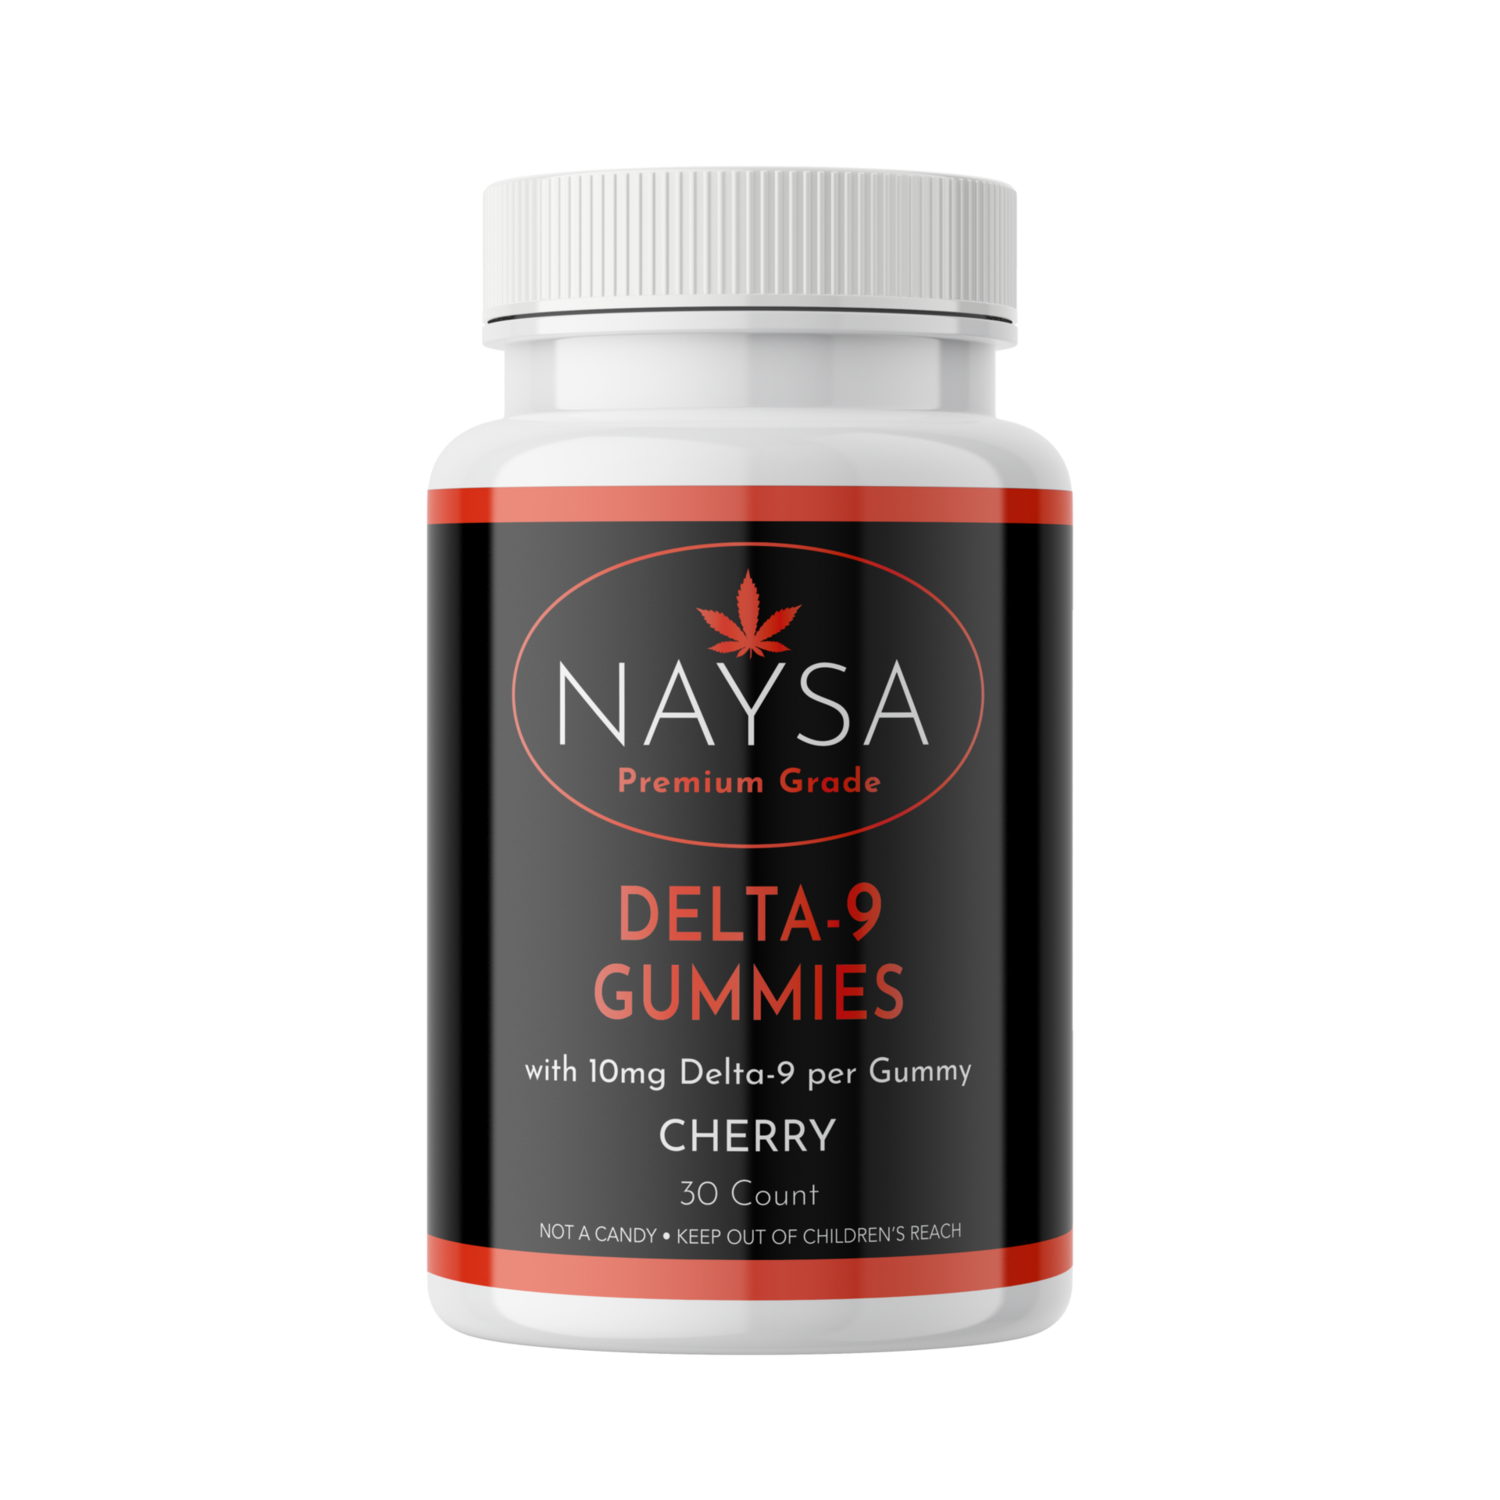 Naysa Vegan Delta 9 Gummies 30ct. 8mg